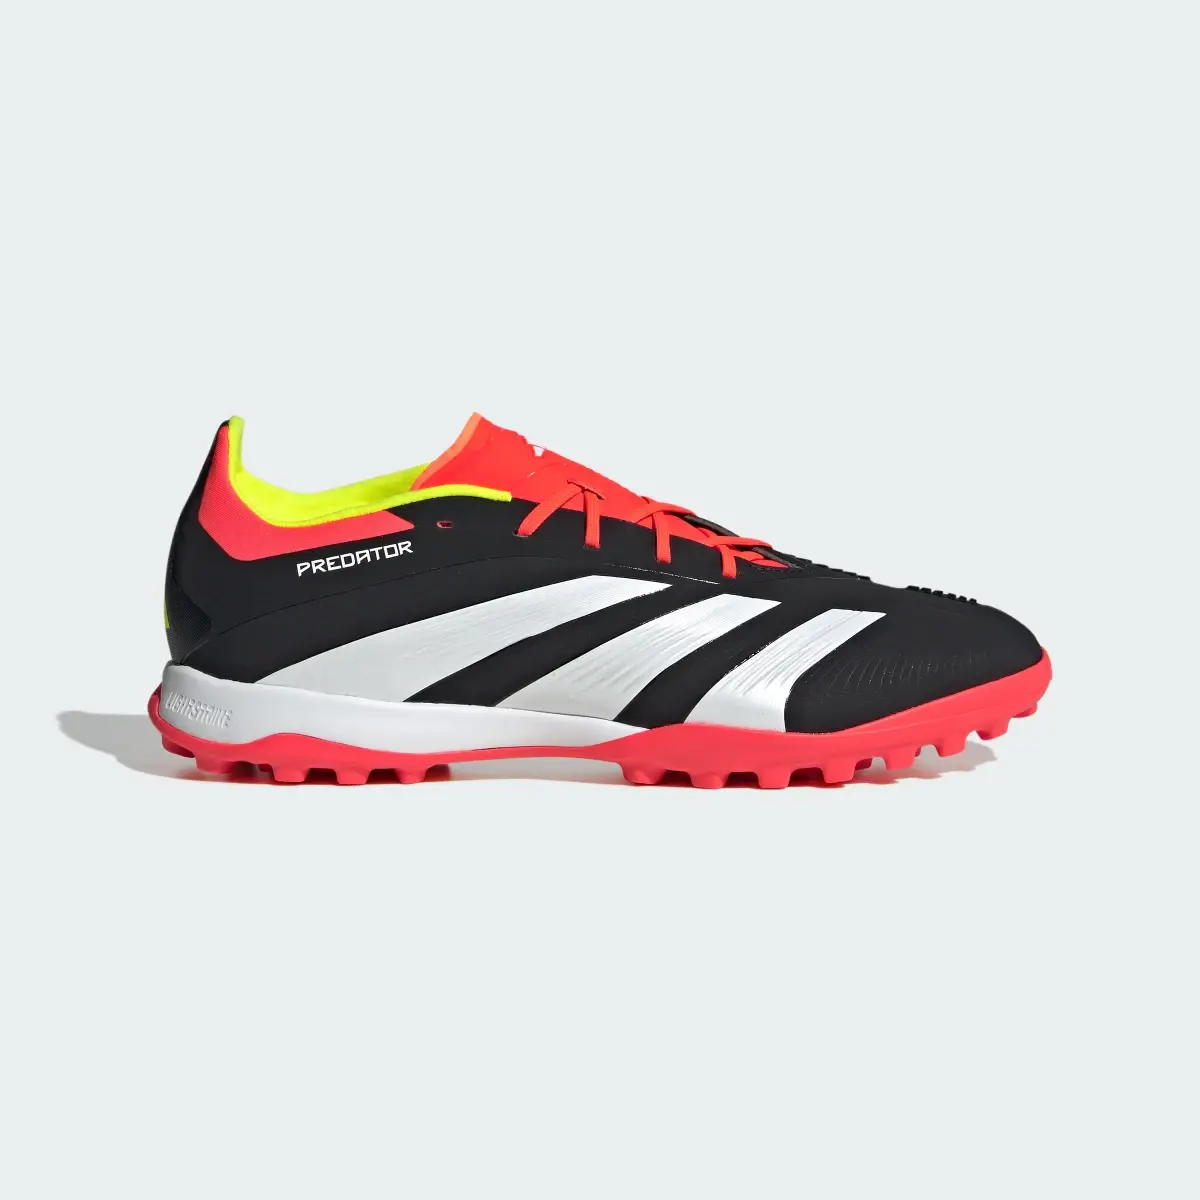 Adidas Predator Elite Turf Football Boots. 2